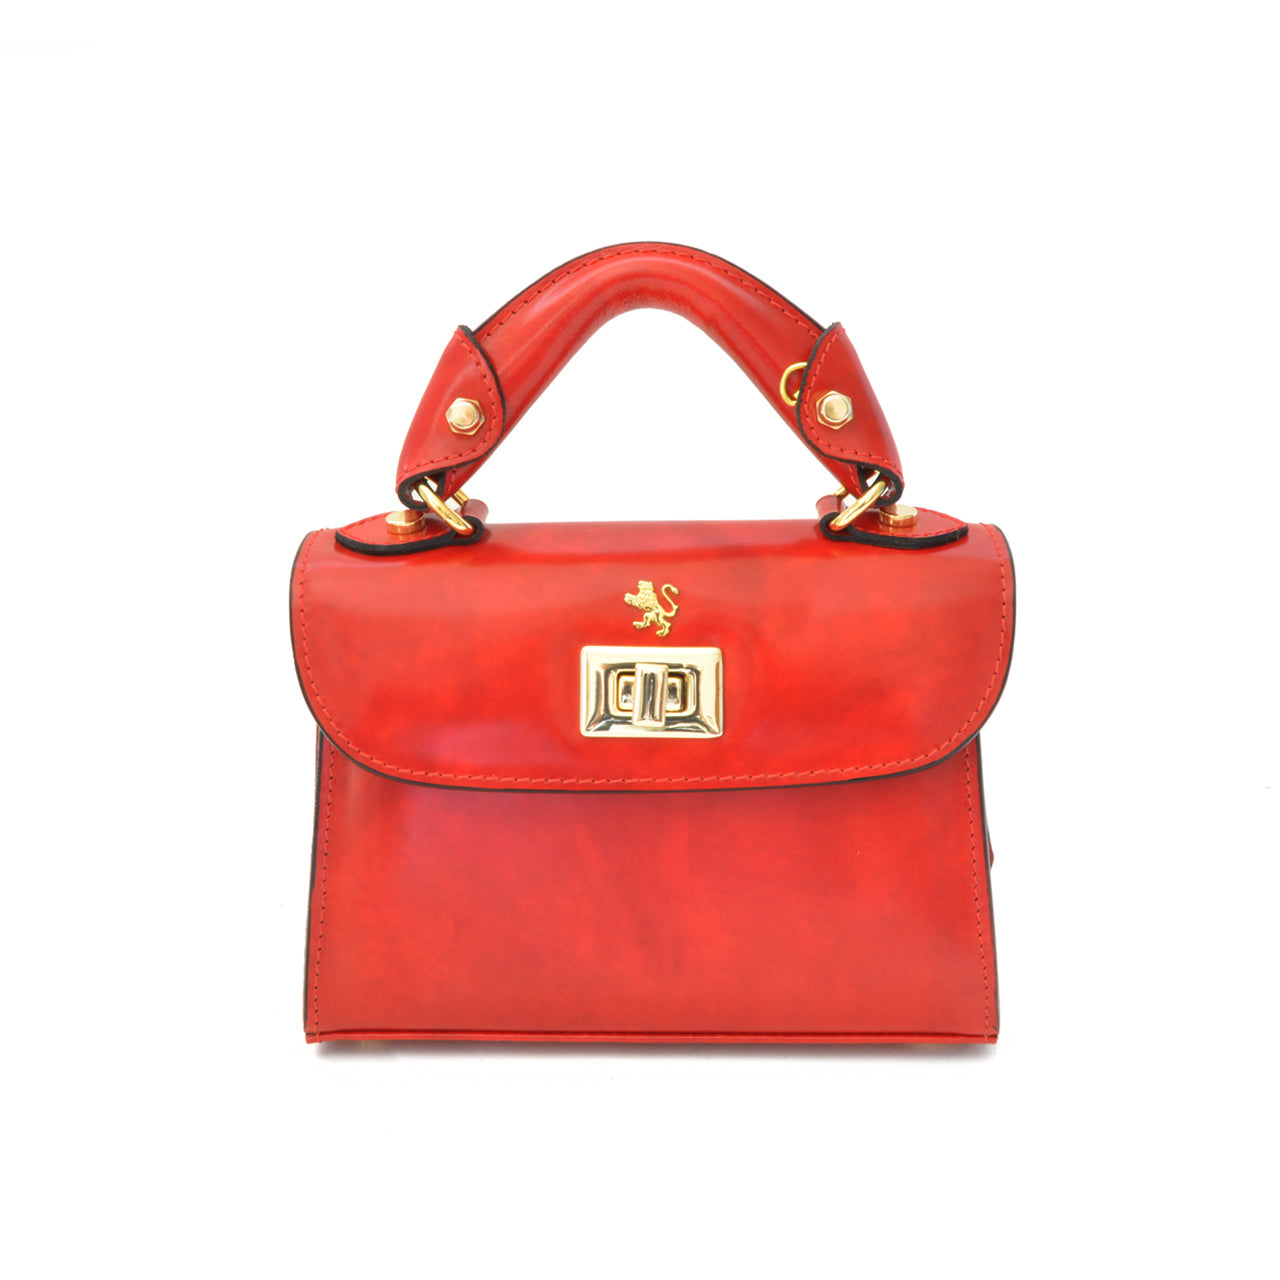 Pratesi Lucignano Small Handbag in genuine Italian leather